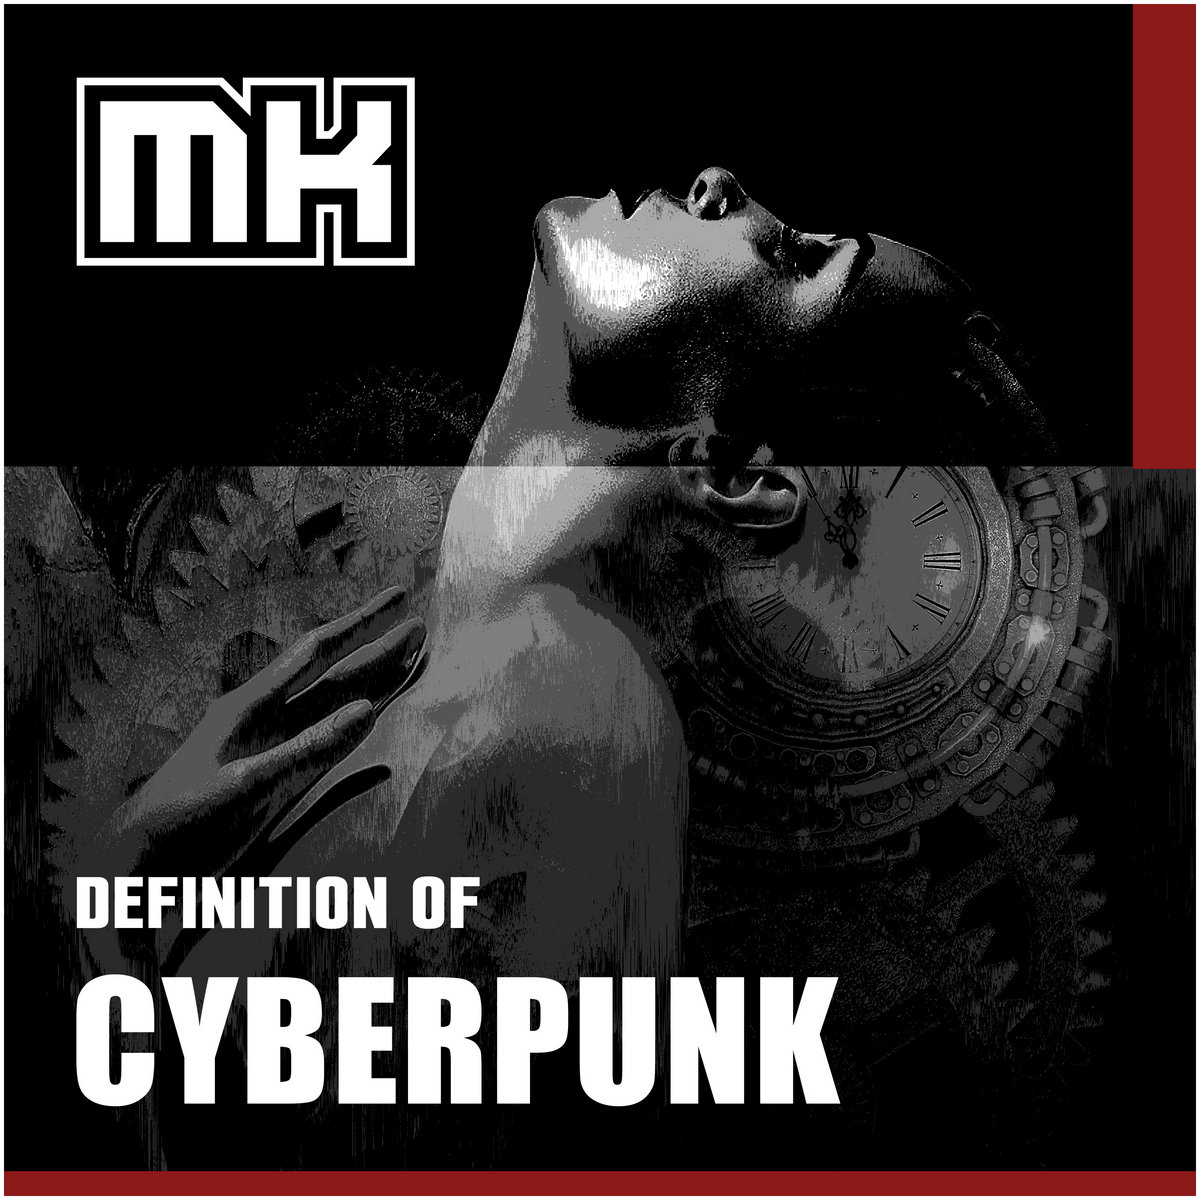 cyberpunk definition